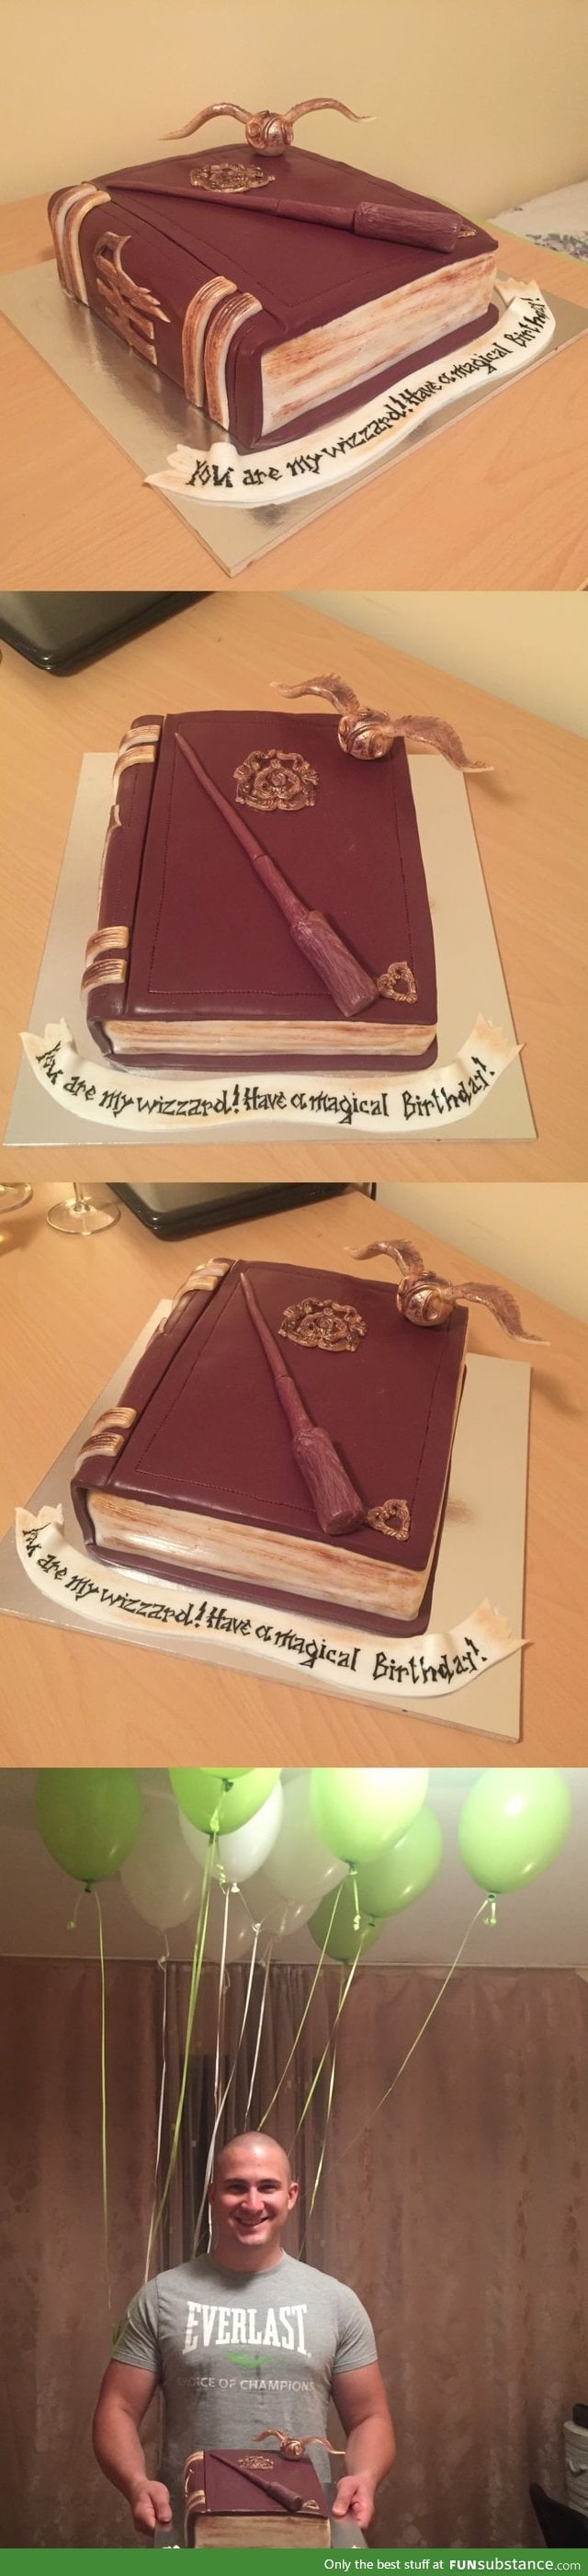 My wizard birthday cake